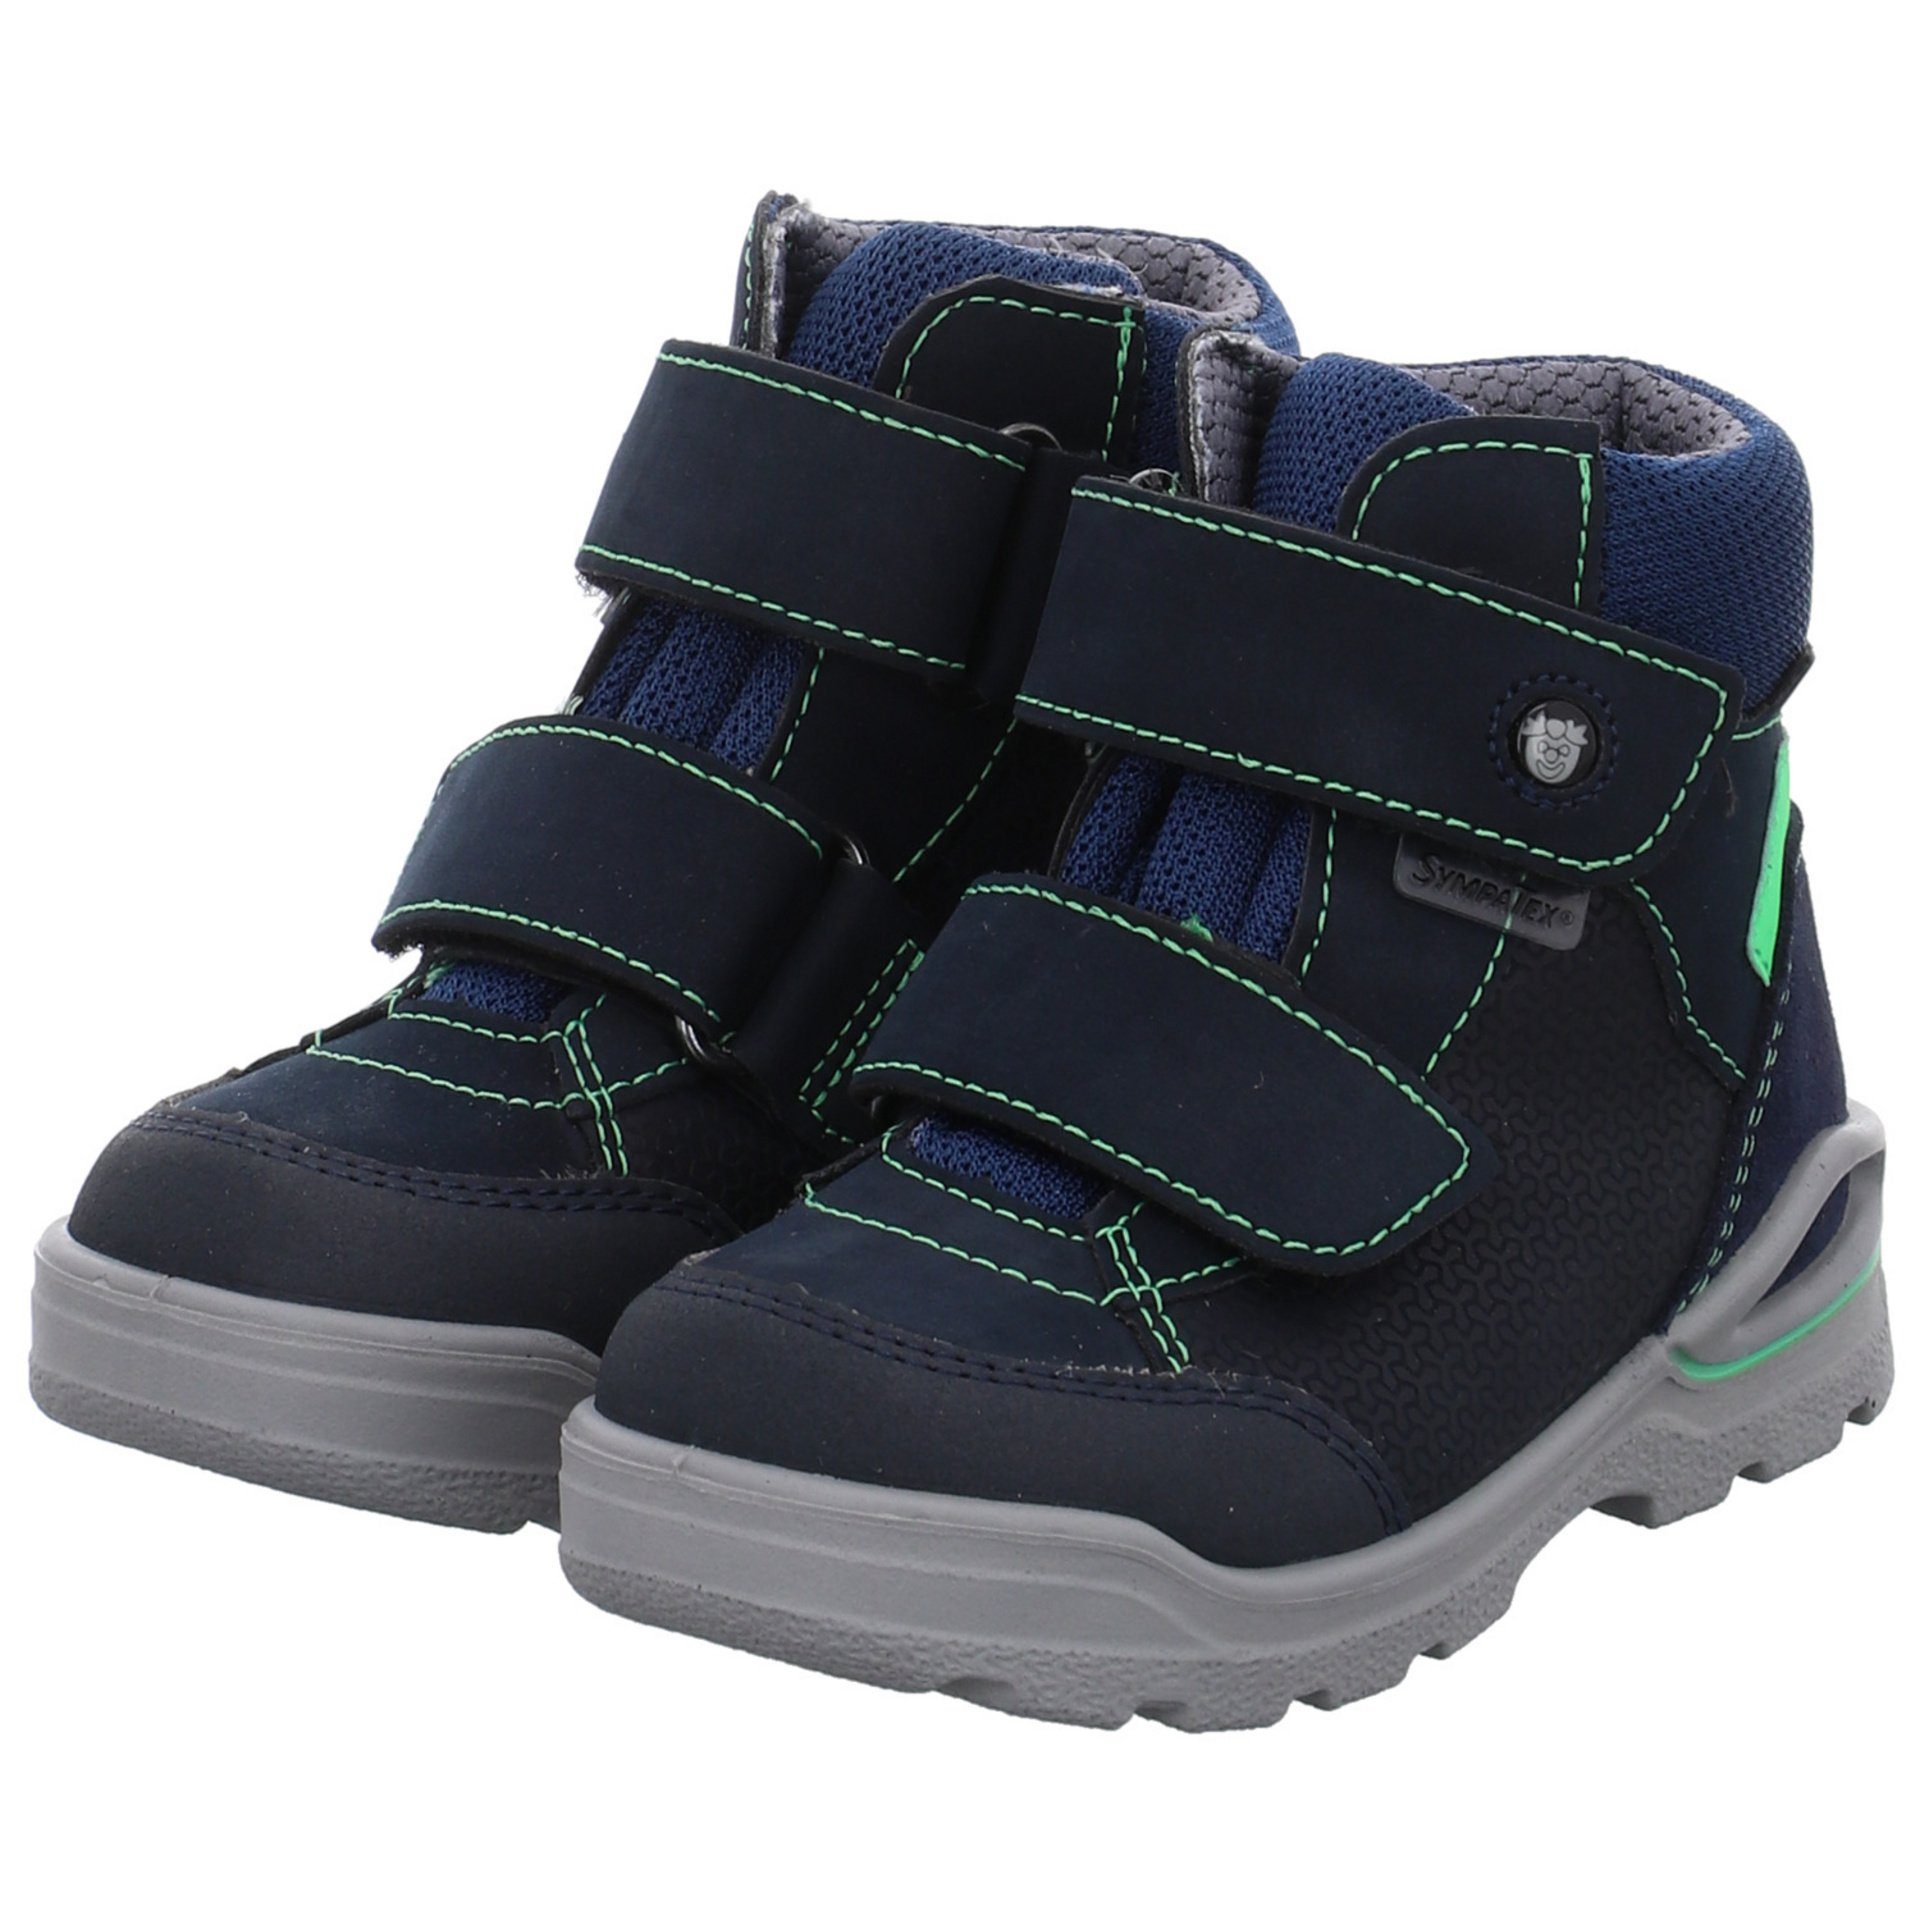 Ricosta blau Finn Kombi Boots Leder-/Textilkombination Leder-/Textilkombination uni Winterboots sonst